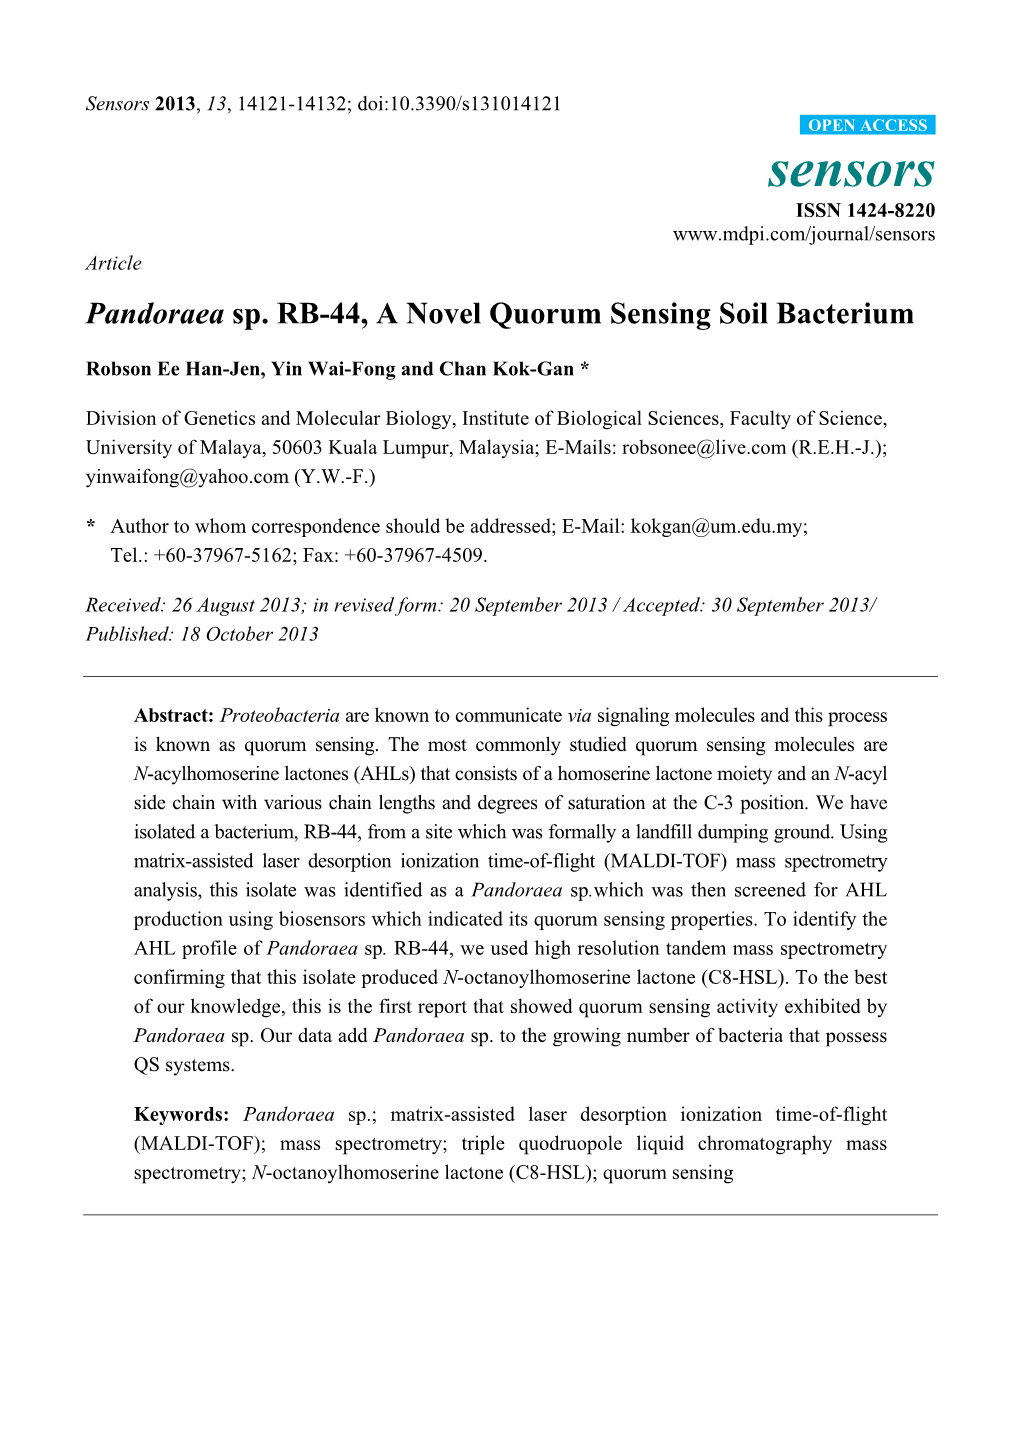 Pandoraea Sp. RB-44, a Novel Quorum Sensing Soil Bacterium